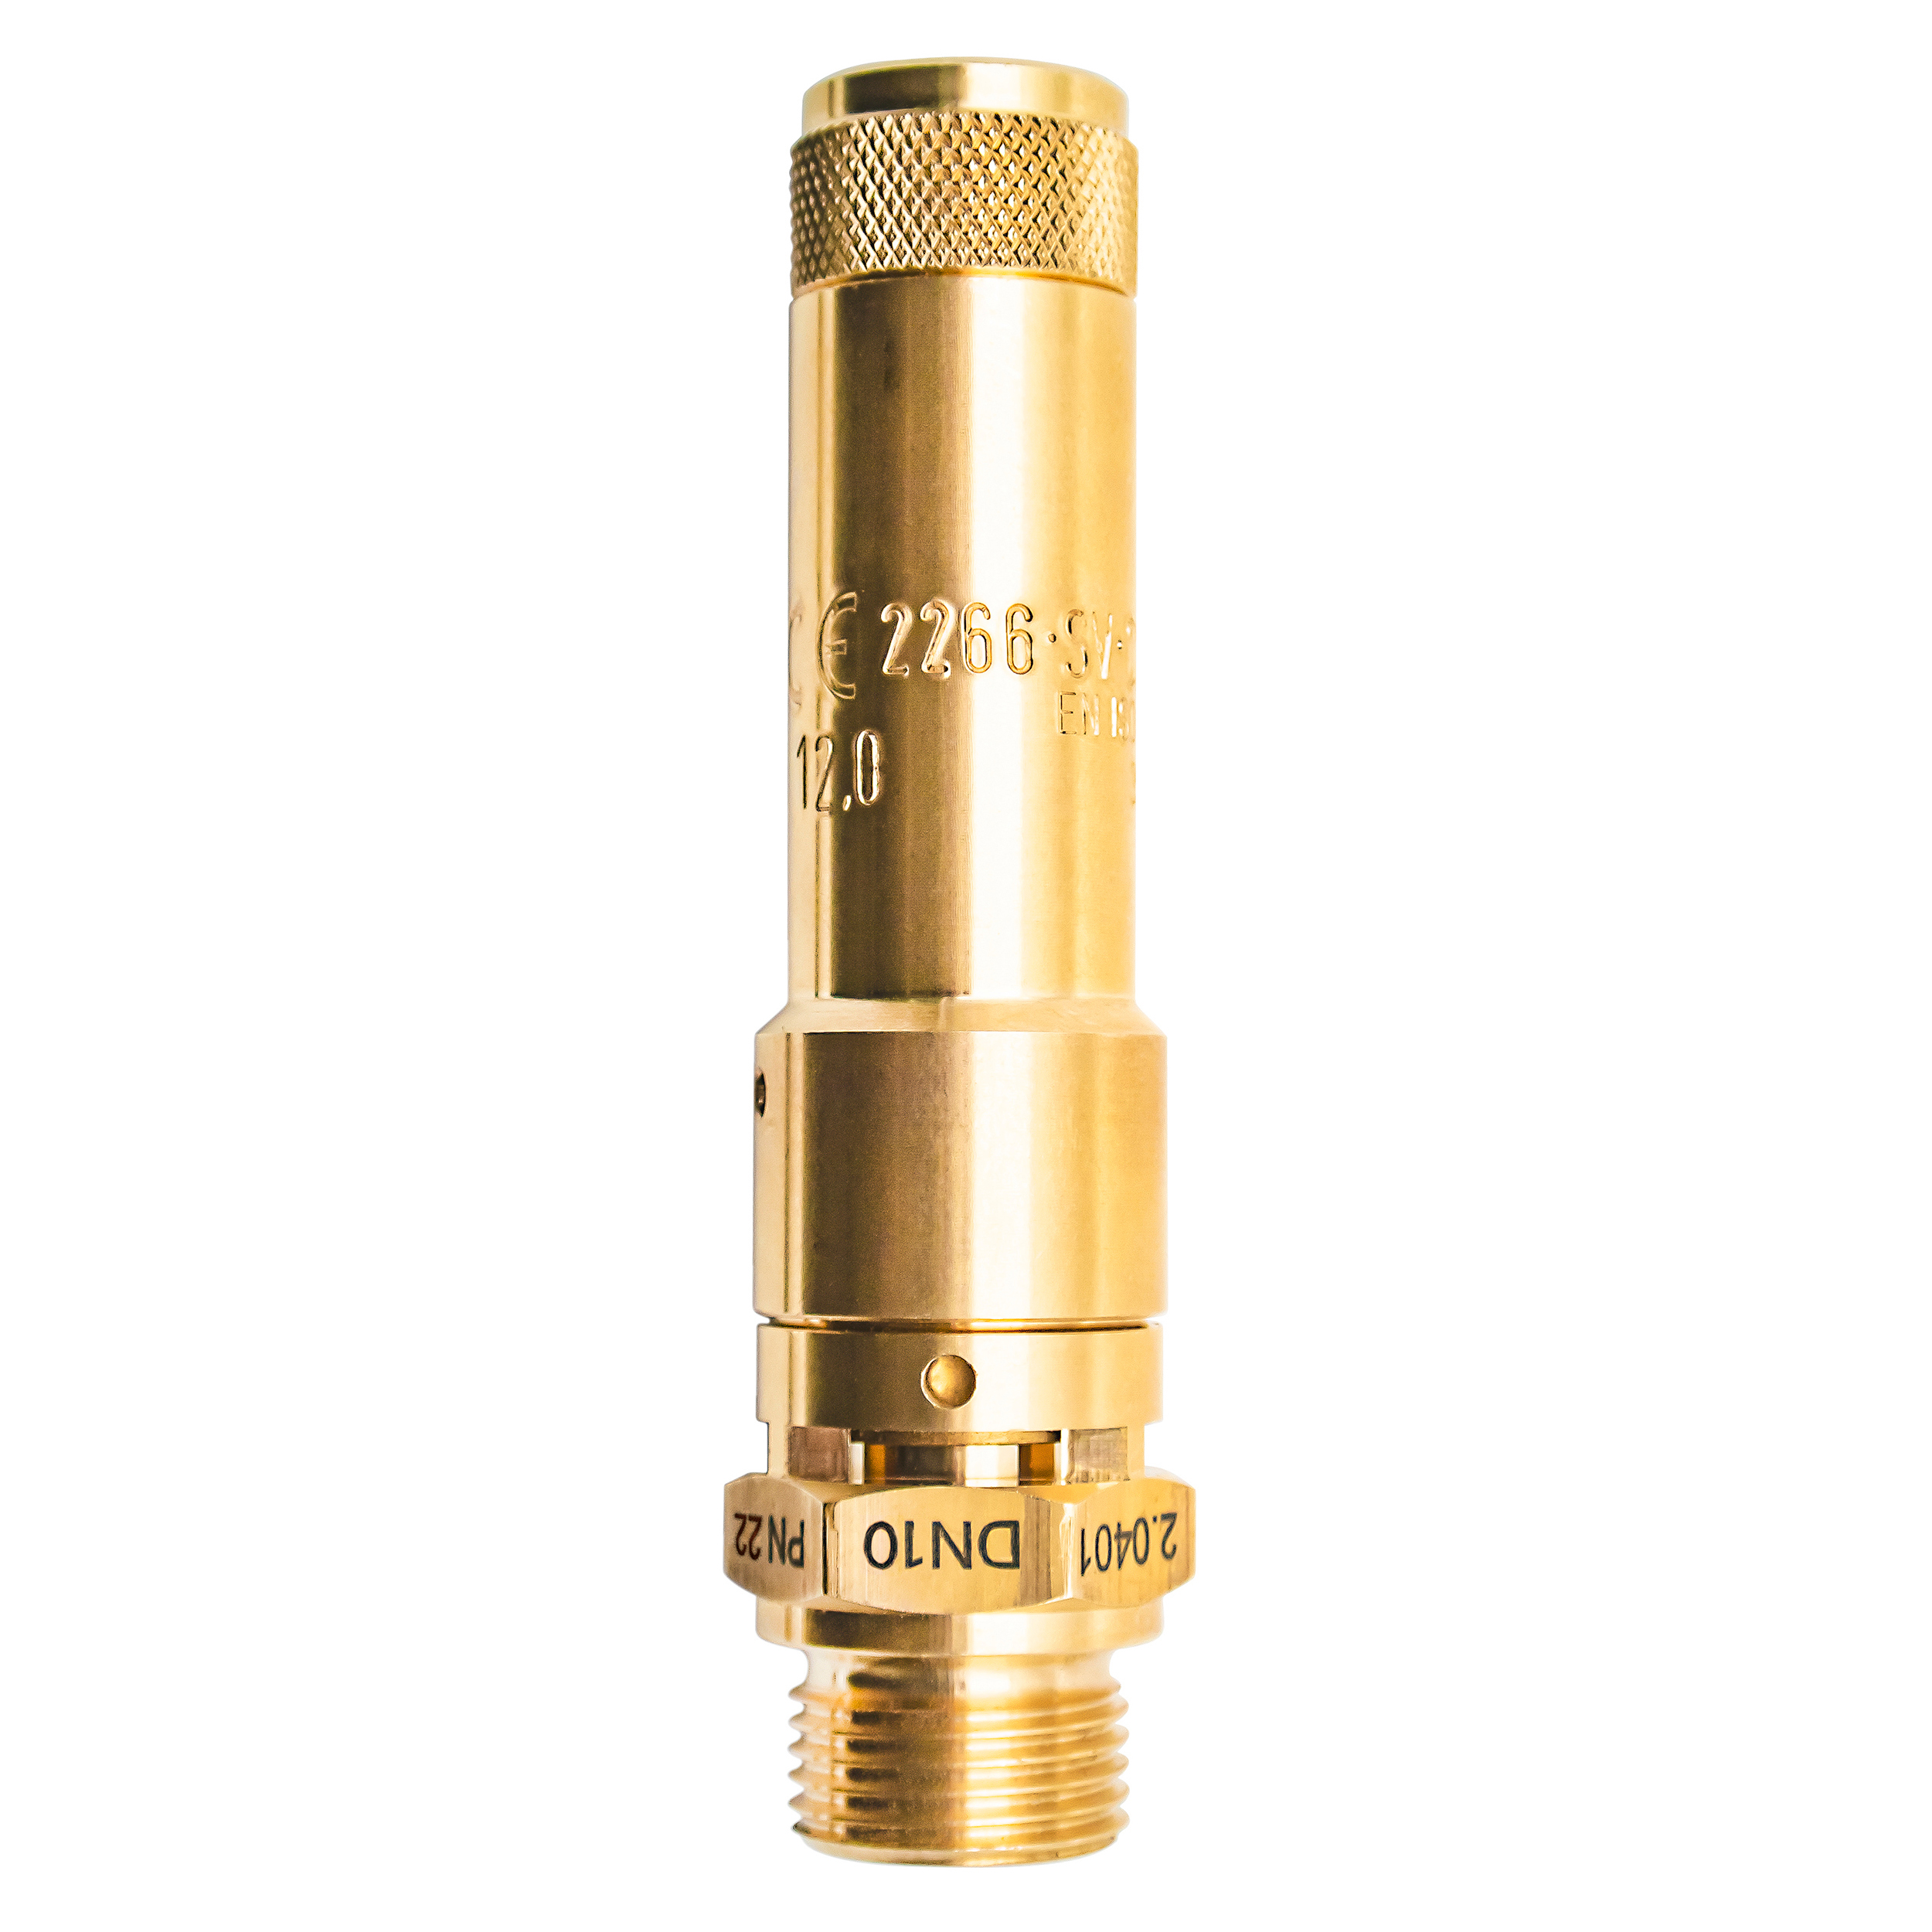 Savety valve component tested DN 10, G½, set pressure: 16.3 bar (236,35 psi)